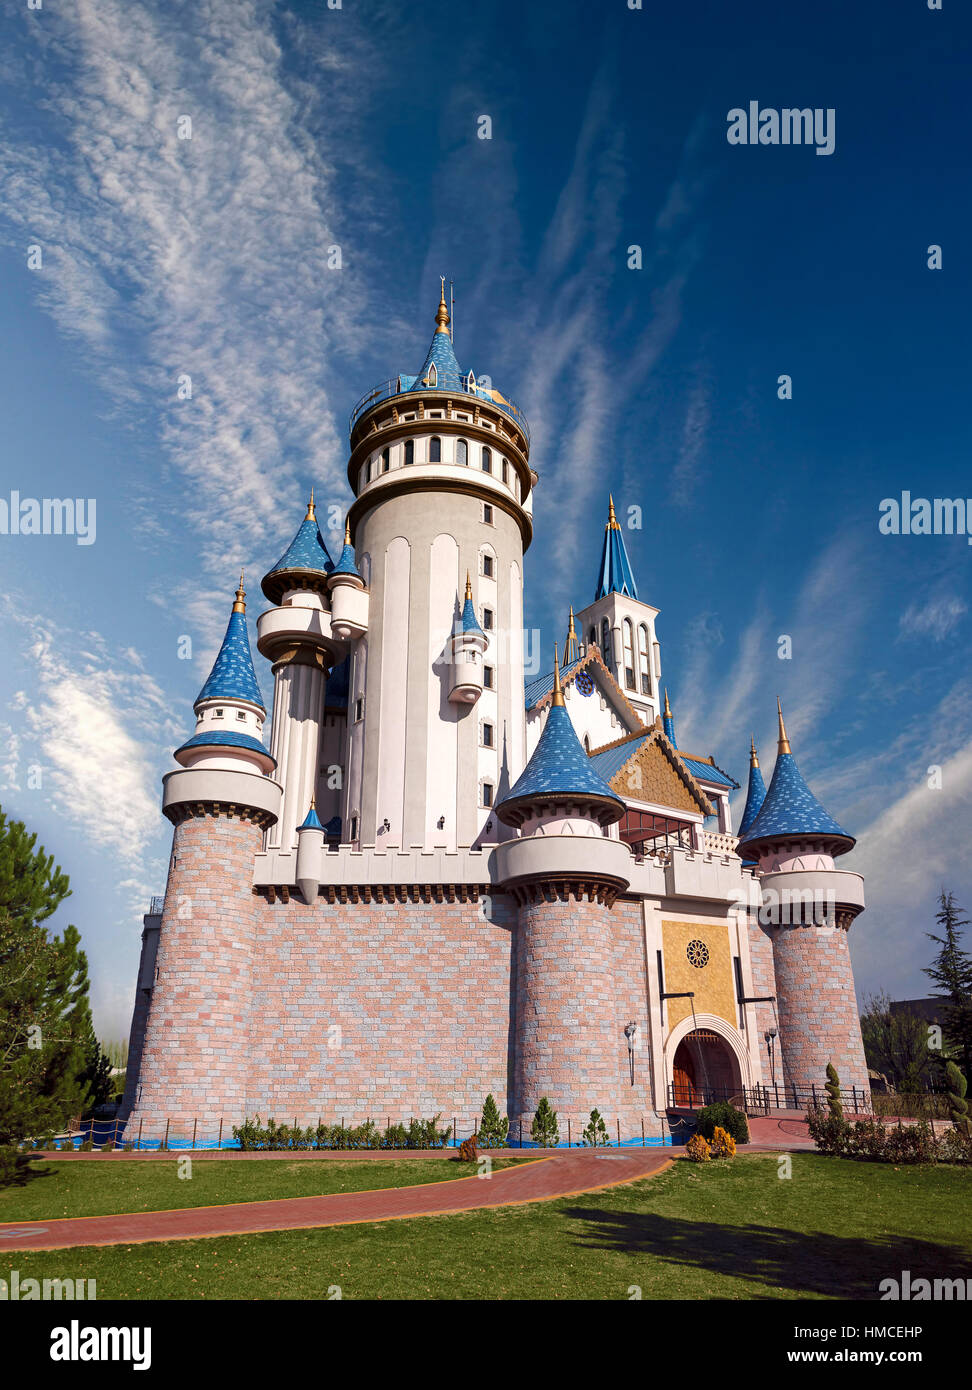 Fairy tale castle at Sazova Park, Eskisehir Stock Photo